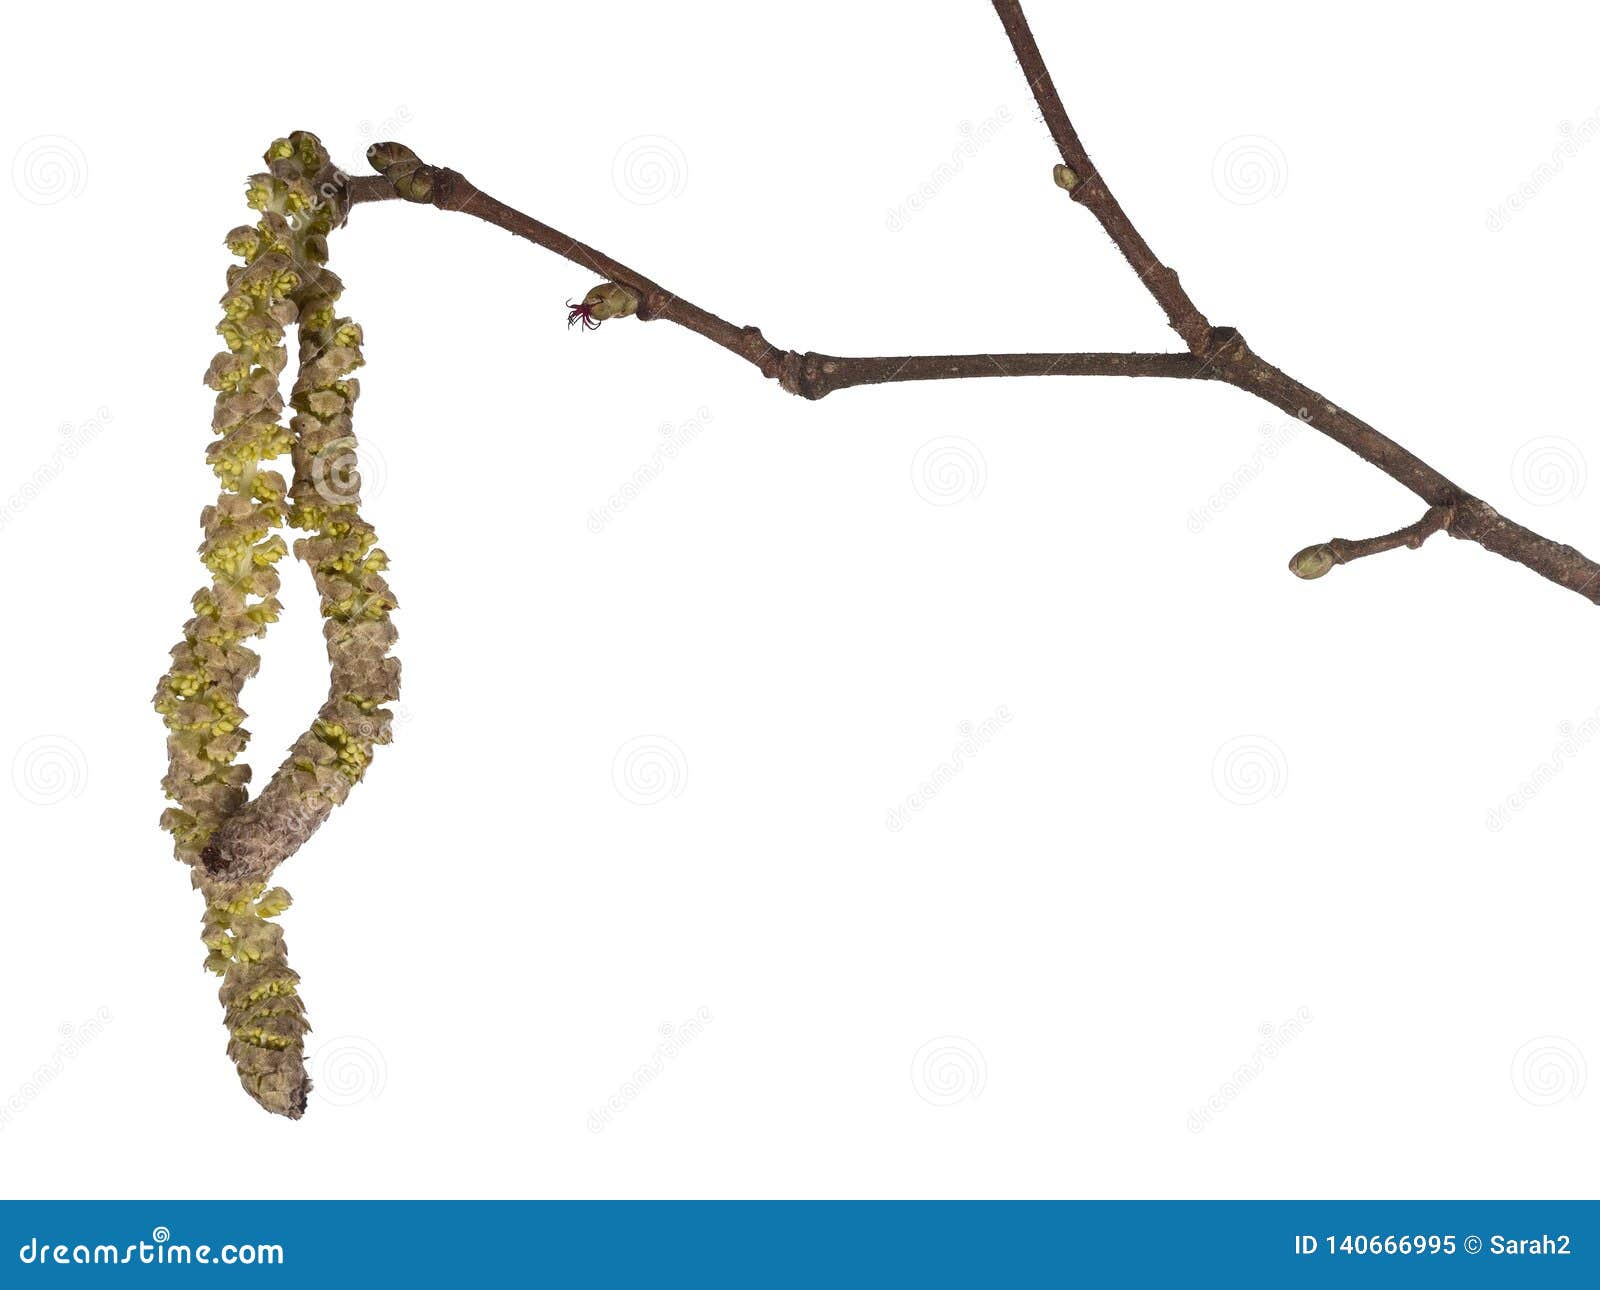 common hazel tree twig with male and female catkins  on white background. corylus avellana, monoecious plant.